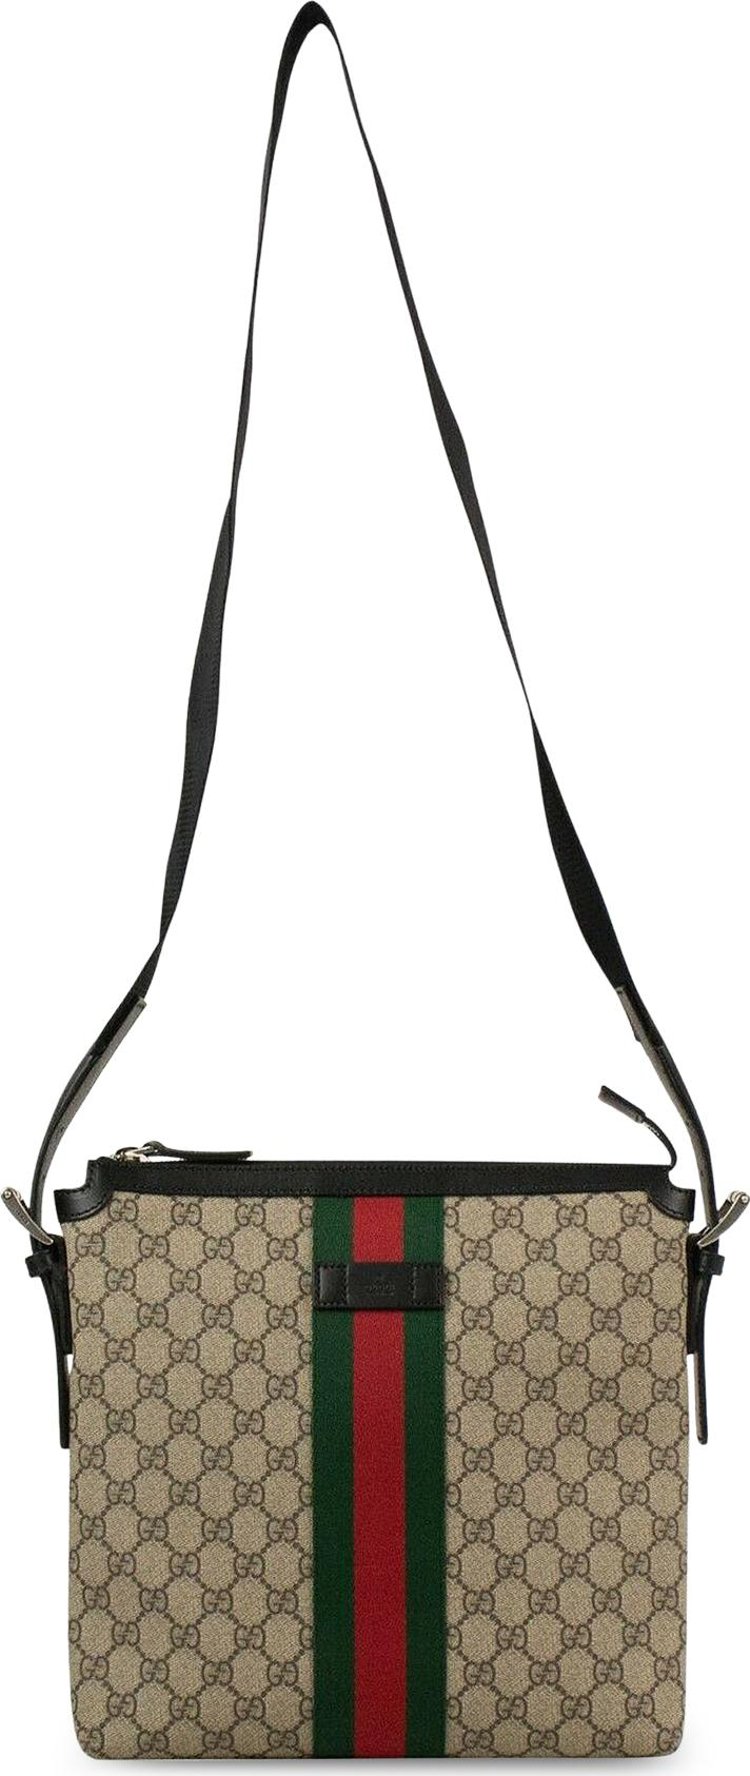 Gucci sling bag in cotton( original)  Gucci sling bag, Sling bag, Gucci  sling